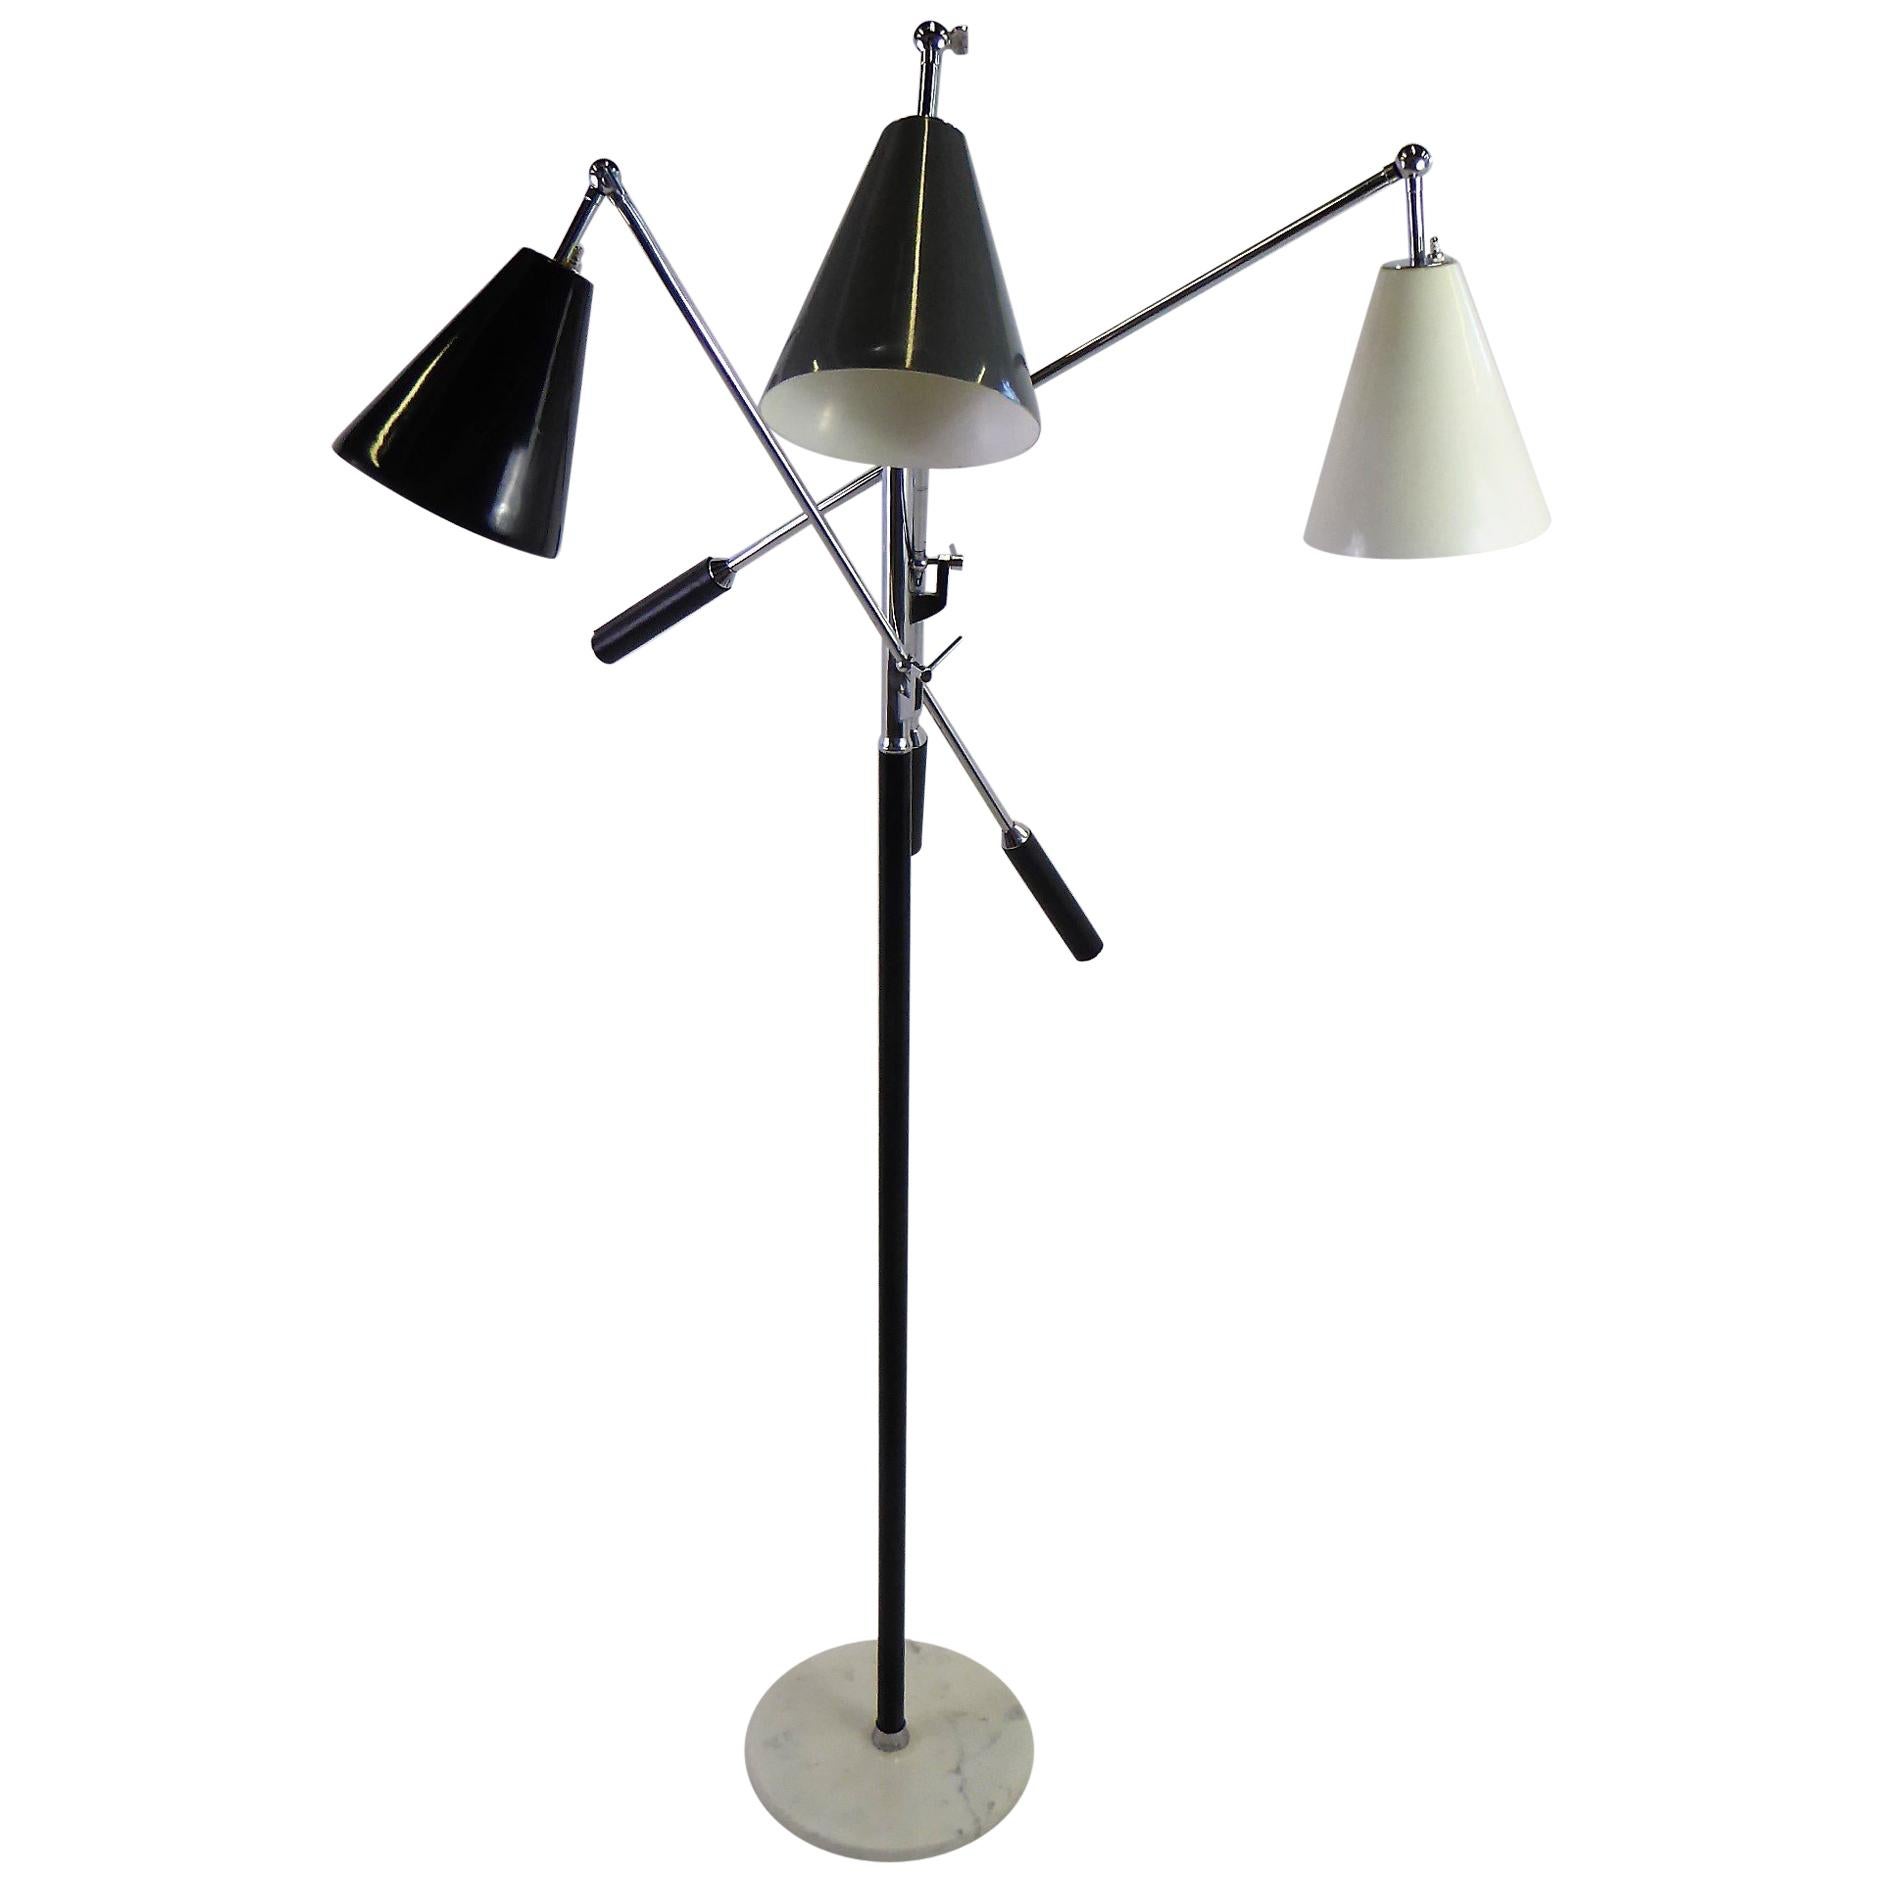 Angelo Lelli Style Design Triennale Three-Arm Articulating Floor Lamp, 1960s